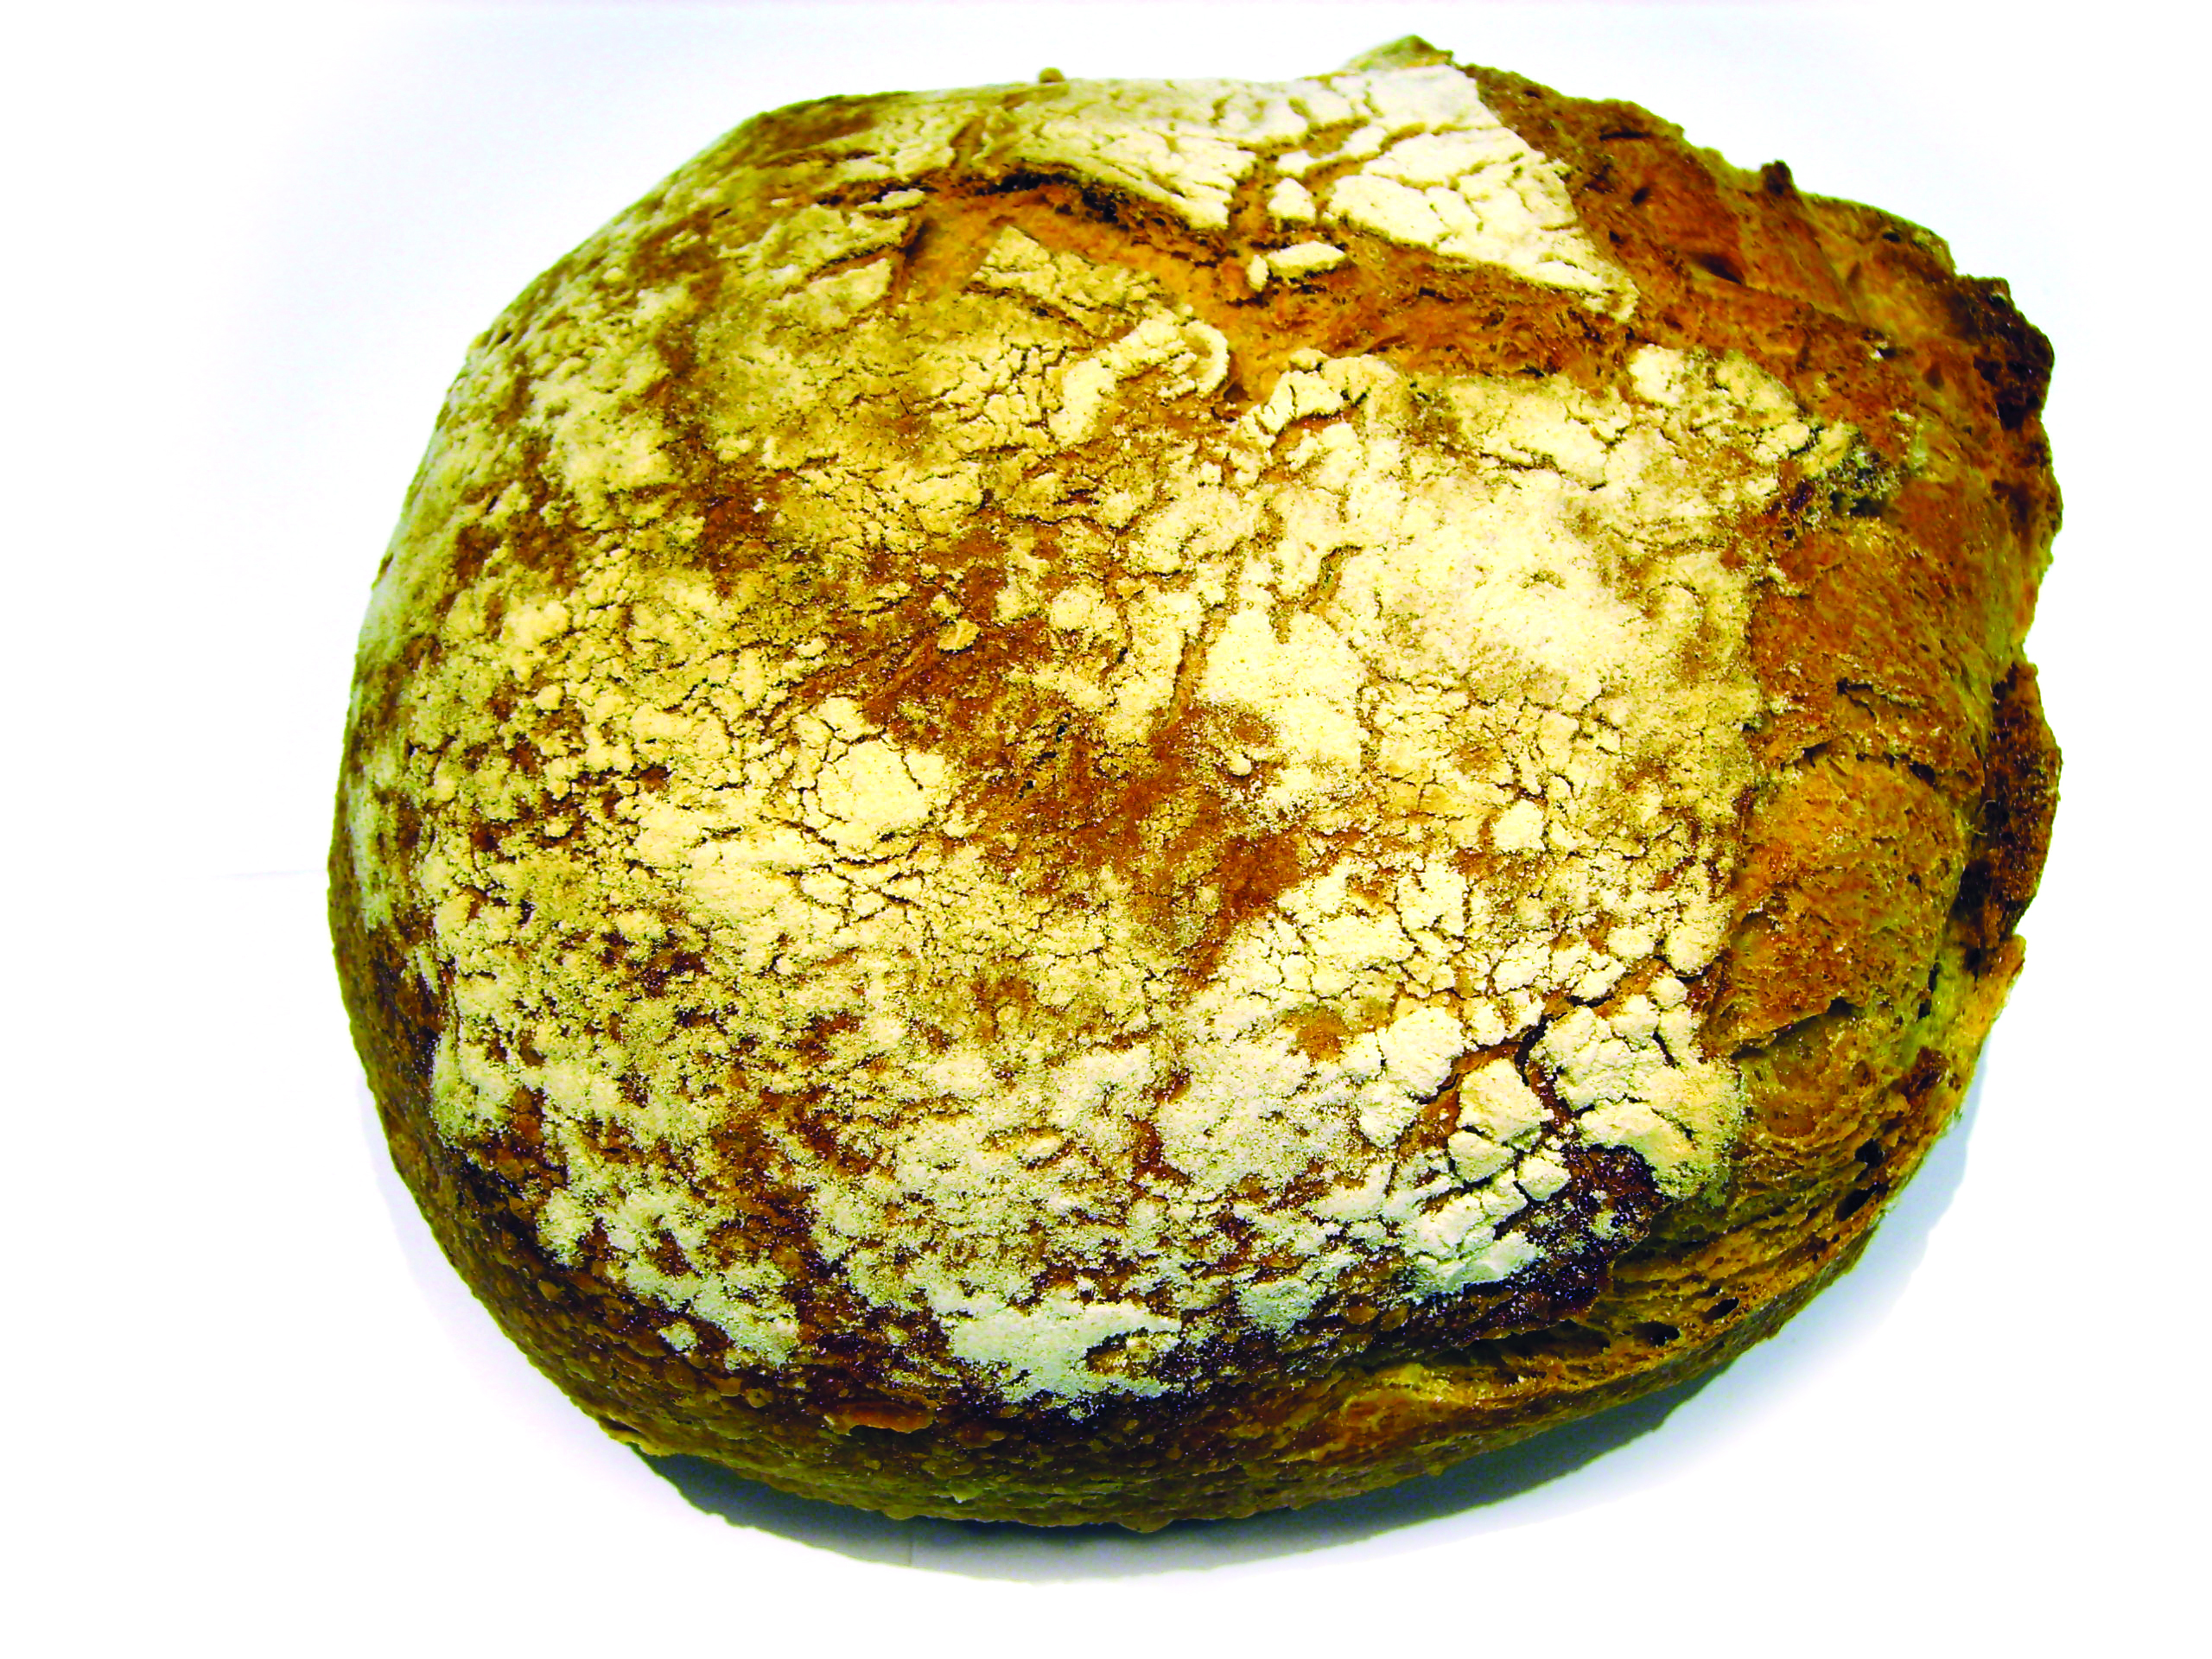 Bread from a supermarket in Benalmadena (Spain)